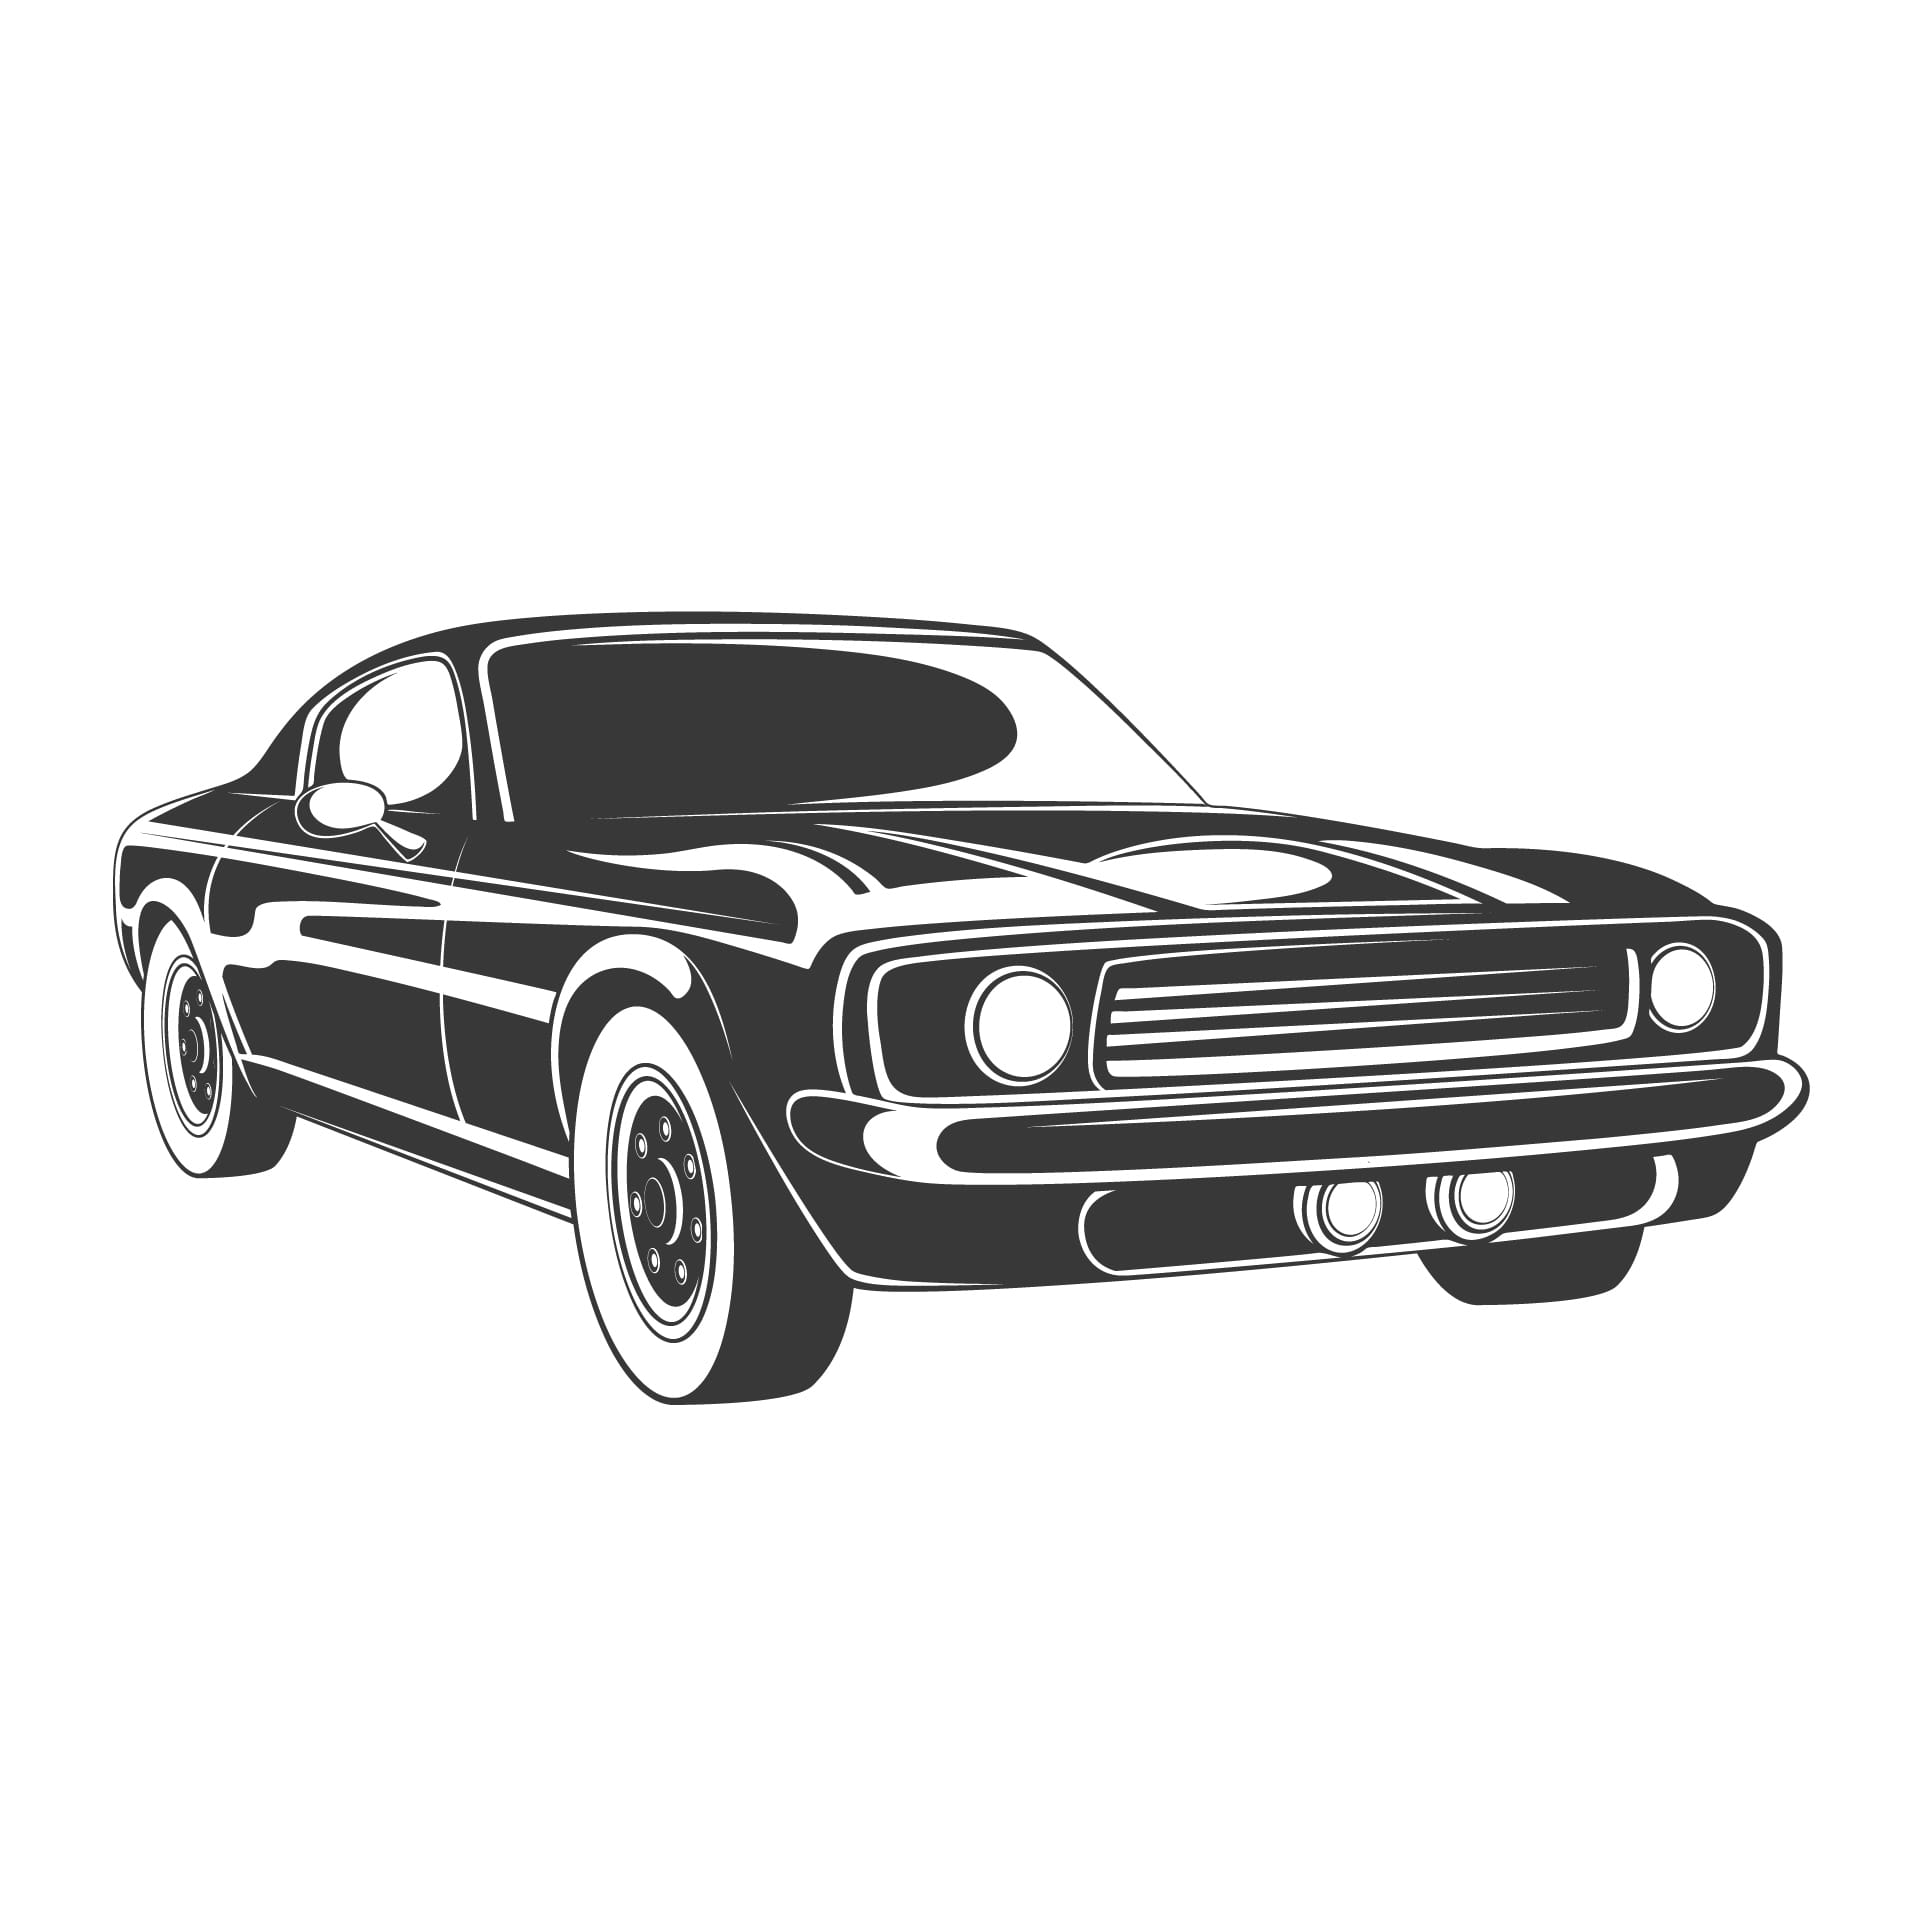 Muscle car icon black vintage auto vehicle image